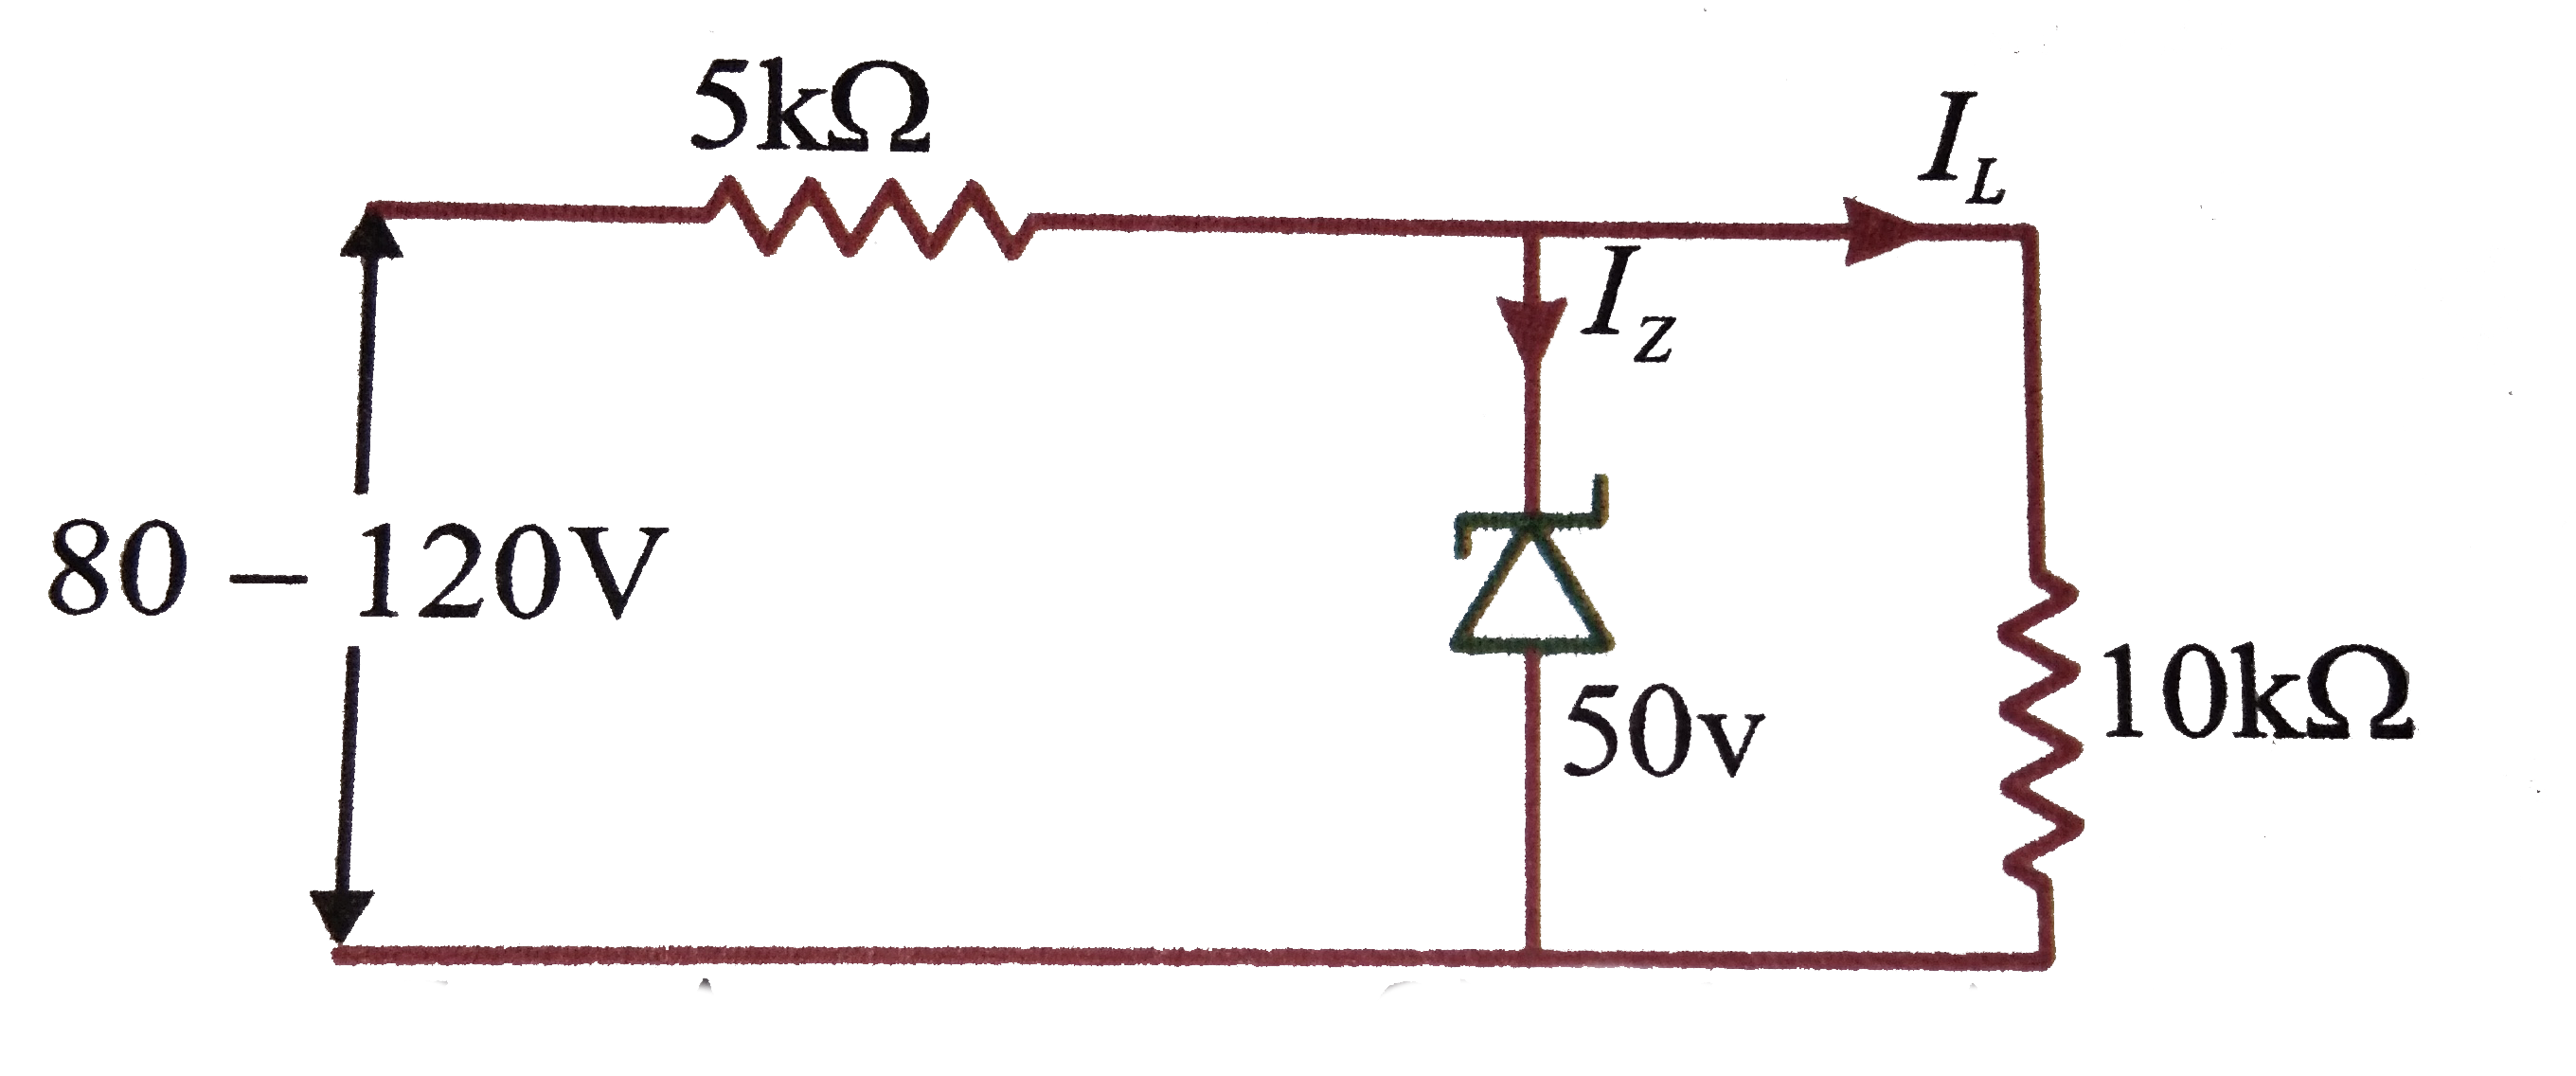 The maximum and minimum values of zener diode current are